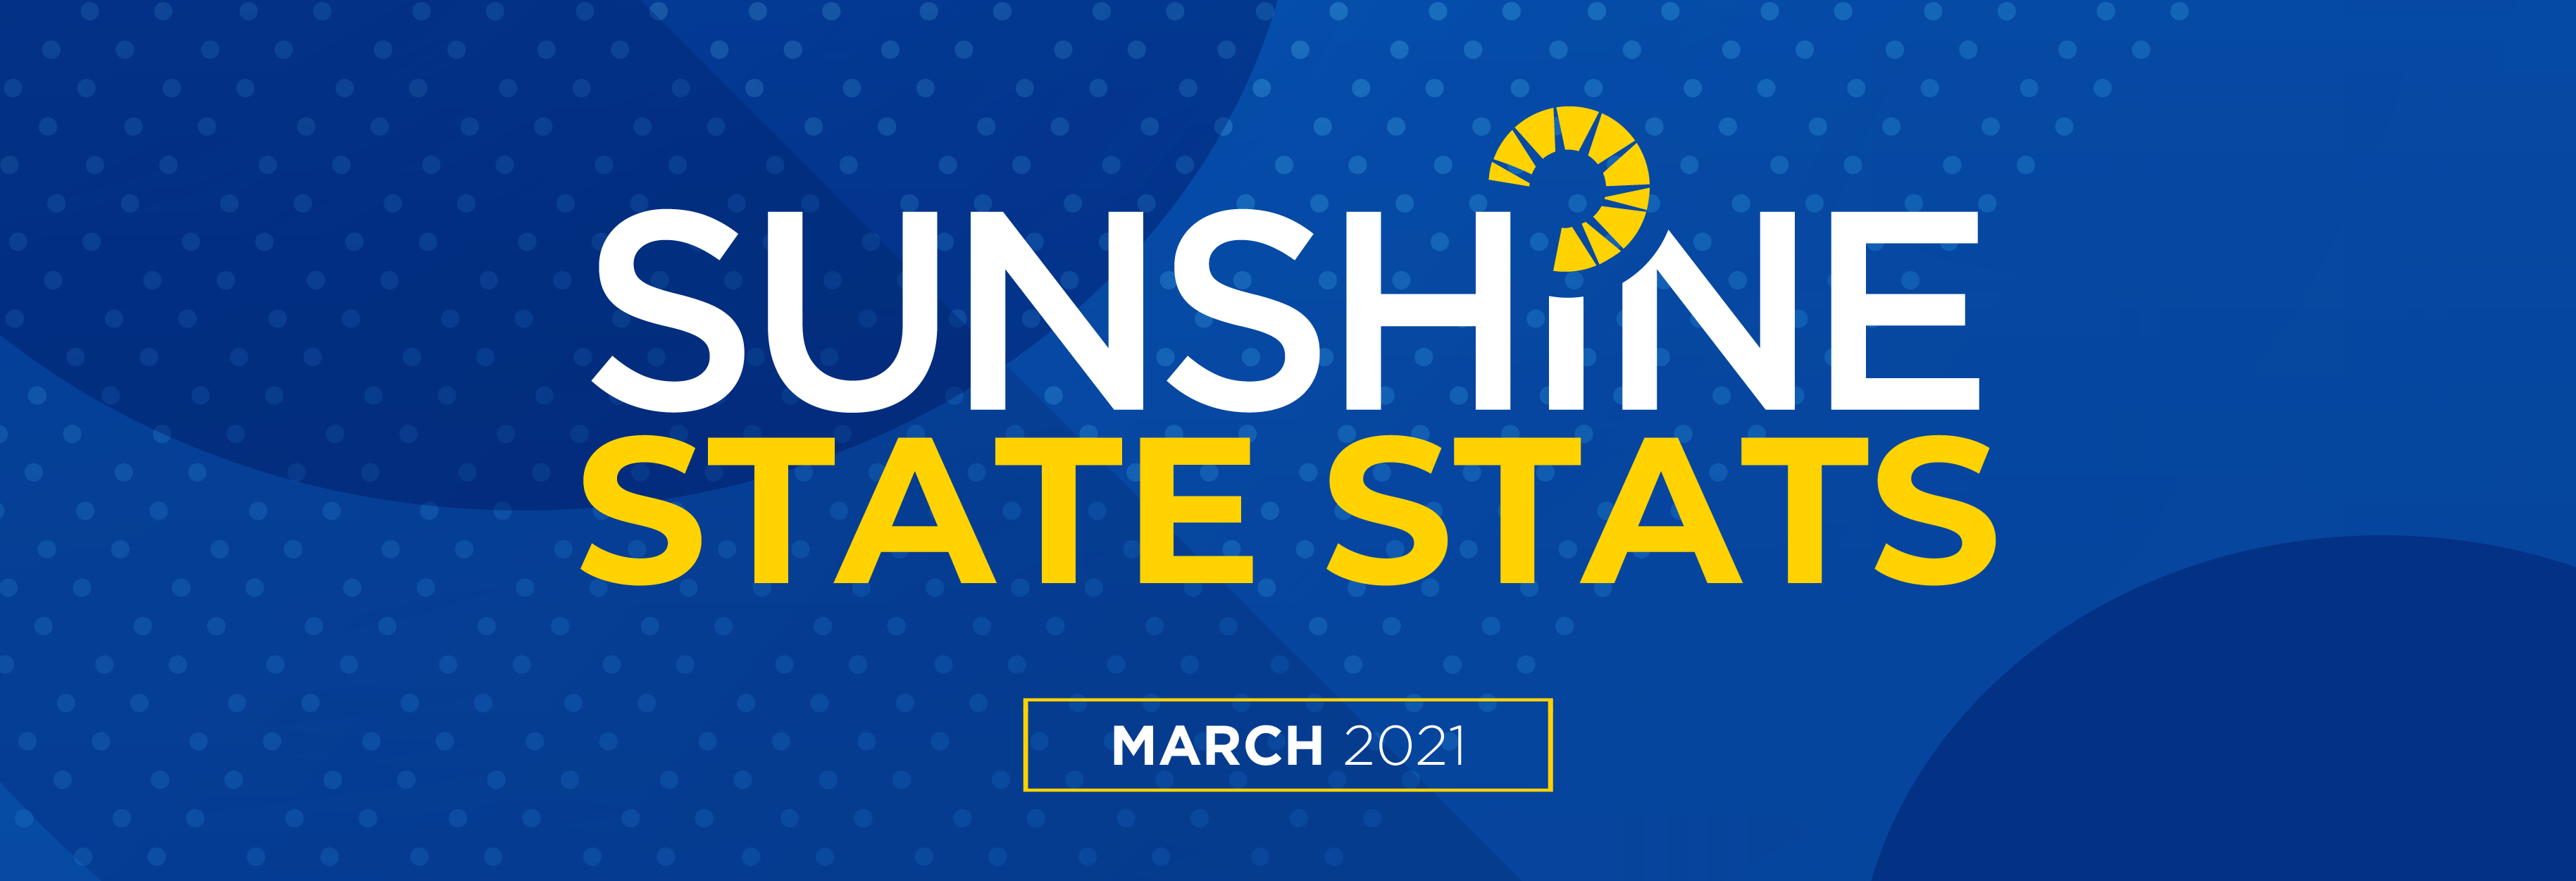 March 2021 Sunshine State Stats